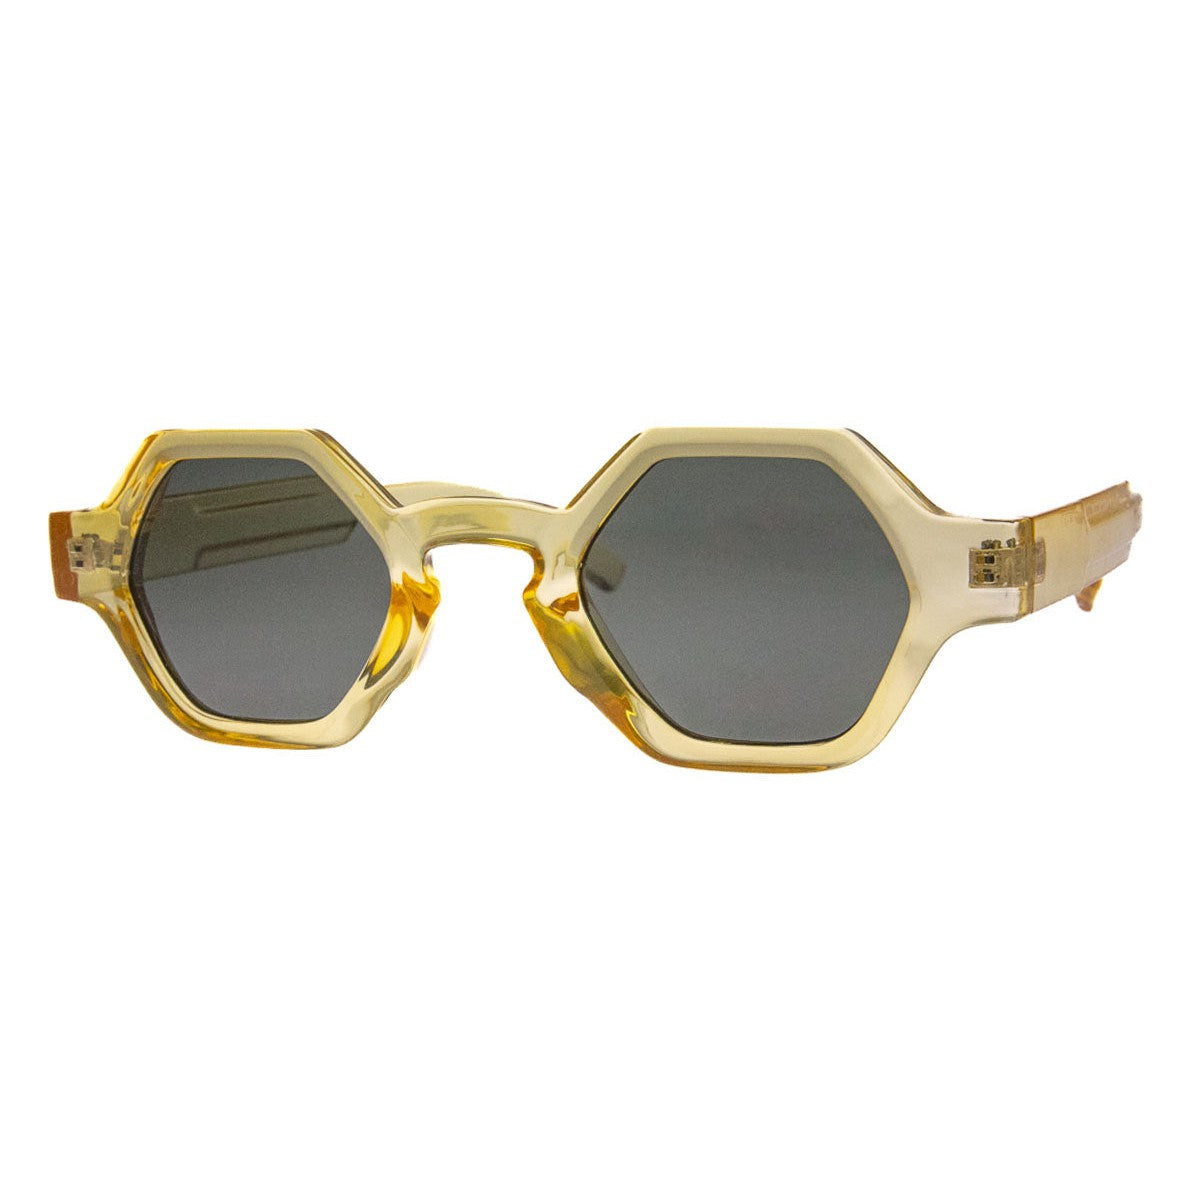 Silent Movies Sunglasses - Yellow